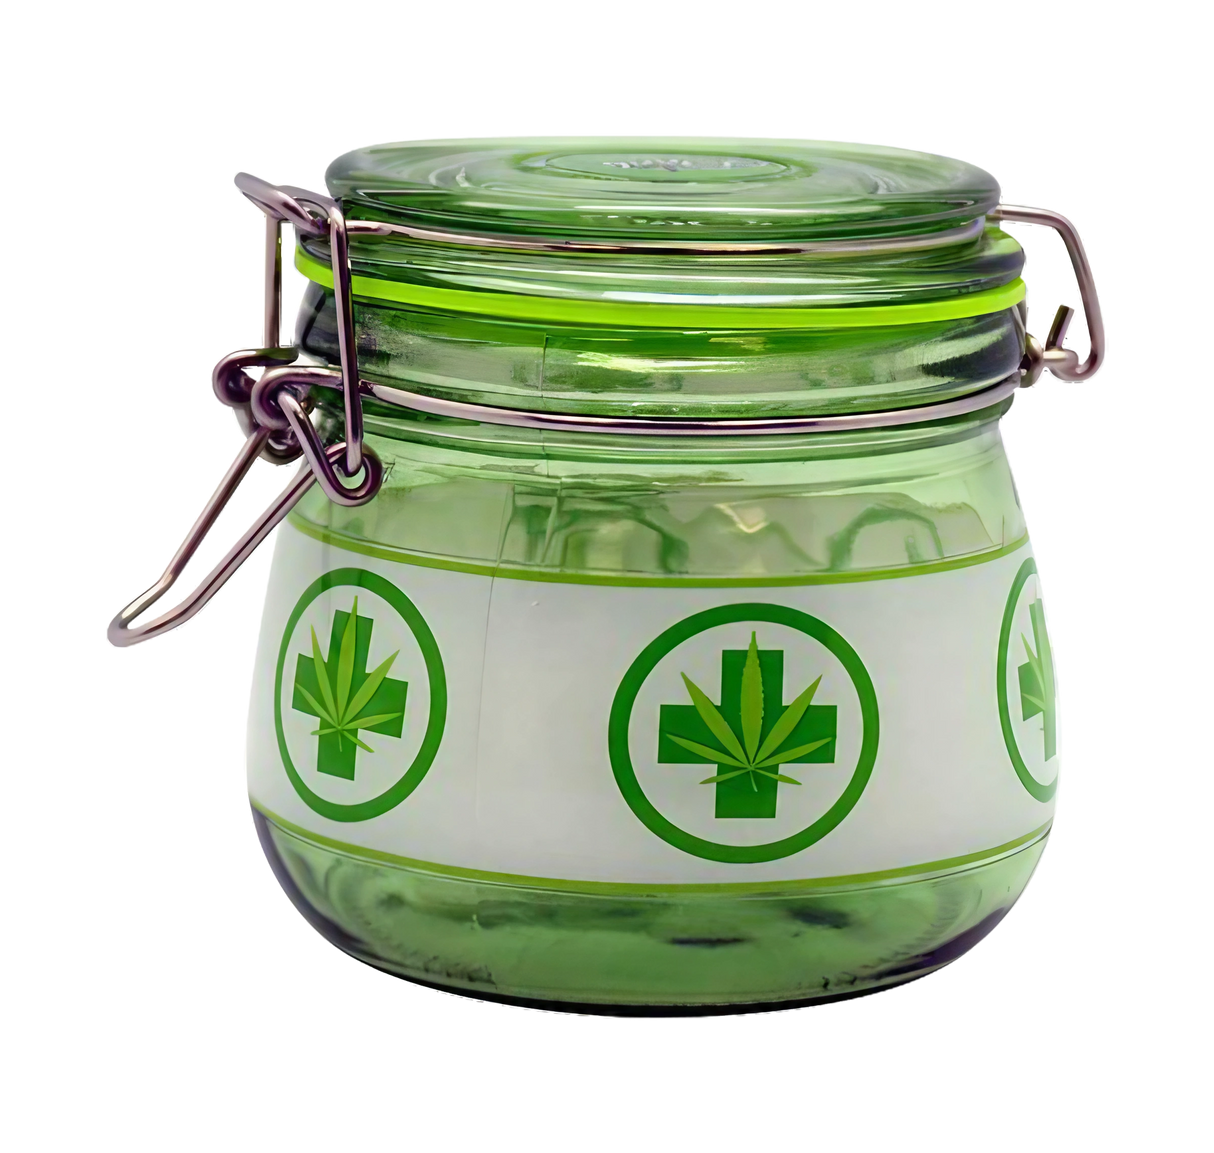 Borosilicate Glass Stash Jar with Medical Leaf Design - Airtight Seal, 4"x4.3" Size